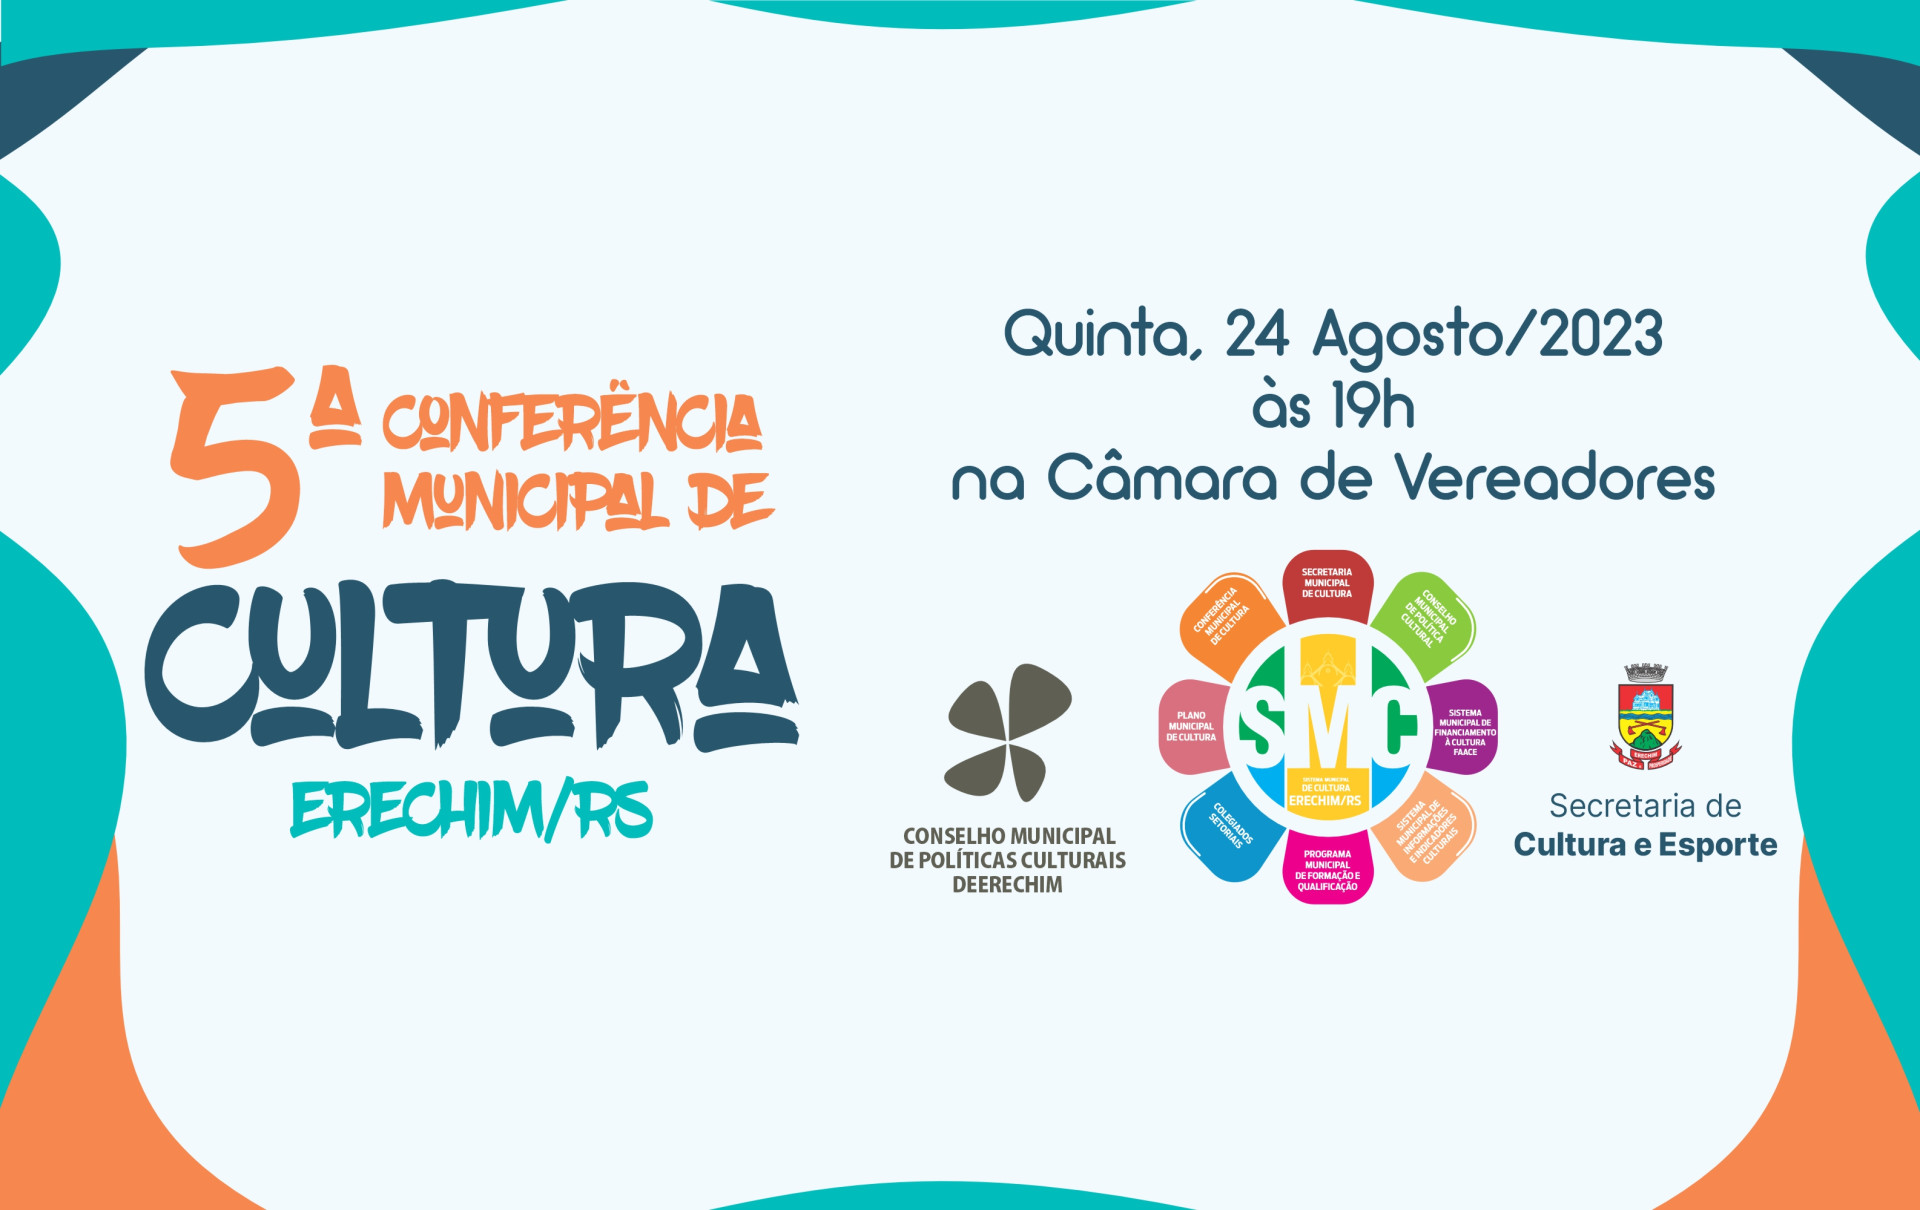  5ª Conferência Municipal de Cultura